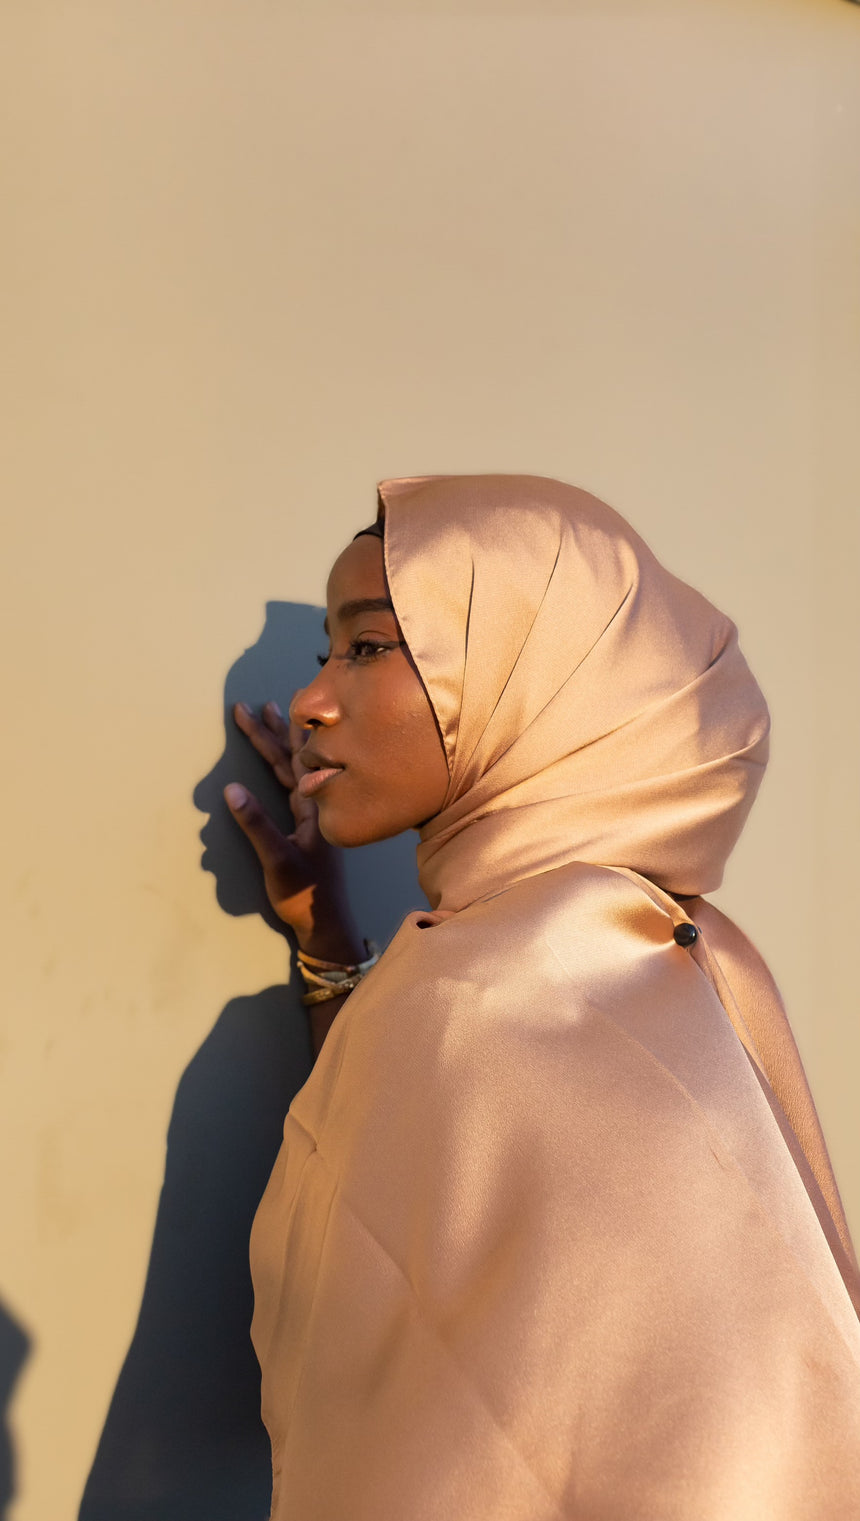 Premium Satin Hijab - Sand dunes